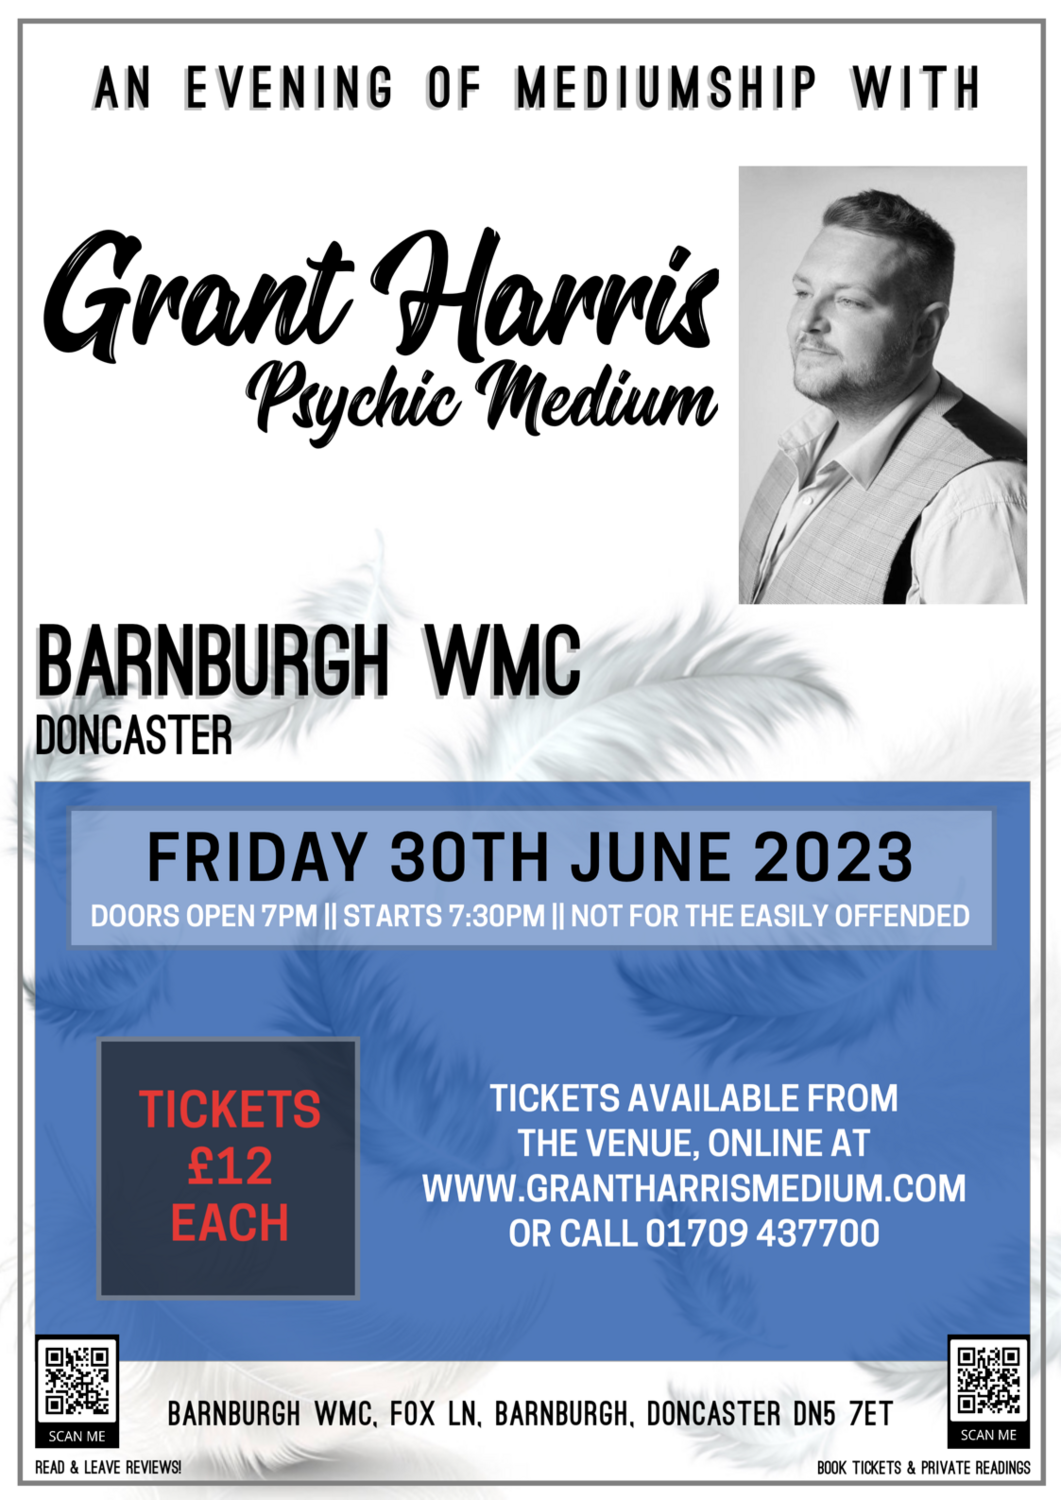 Barnburgh WMC, Doncaster, Friday 30th June 2023